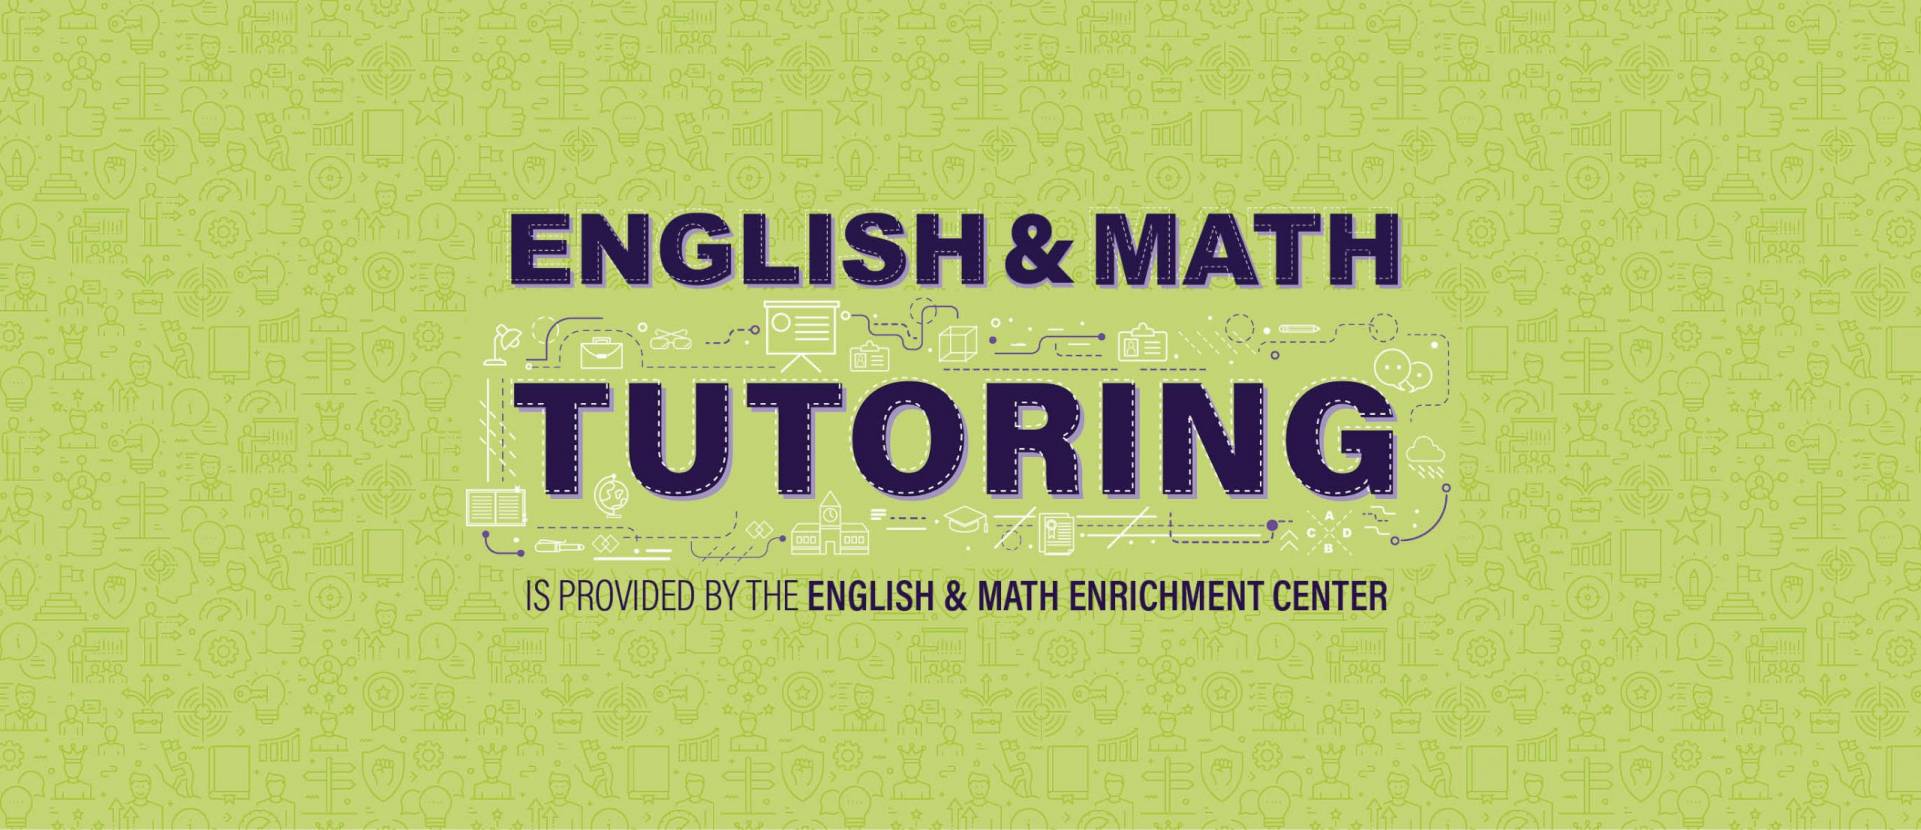 English and Math Tutoring